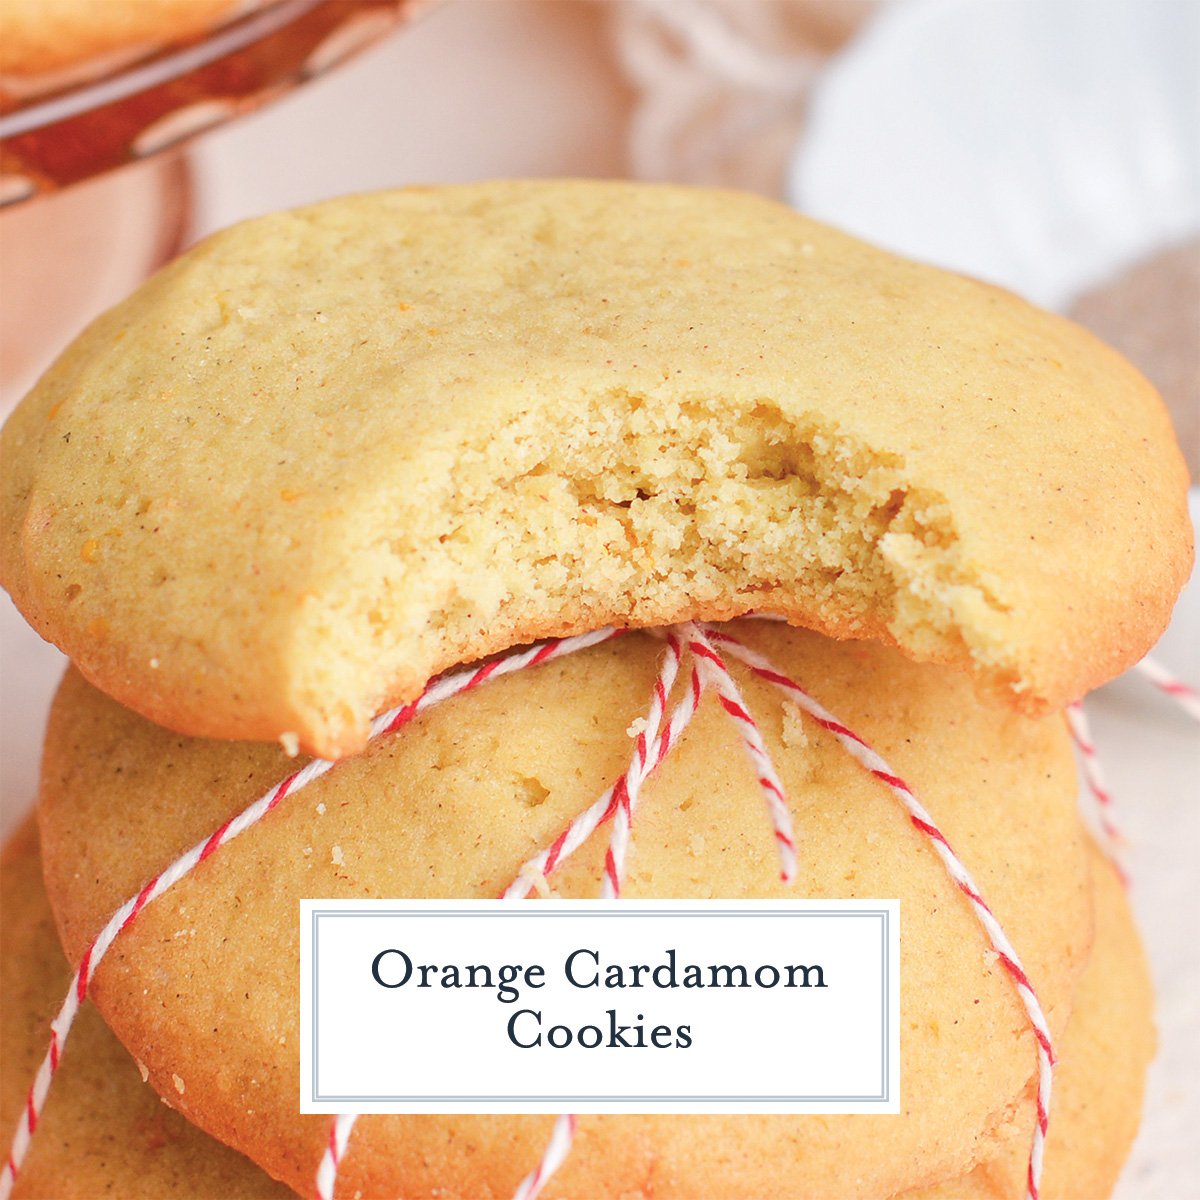 orange cardamom cookie with text overlay